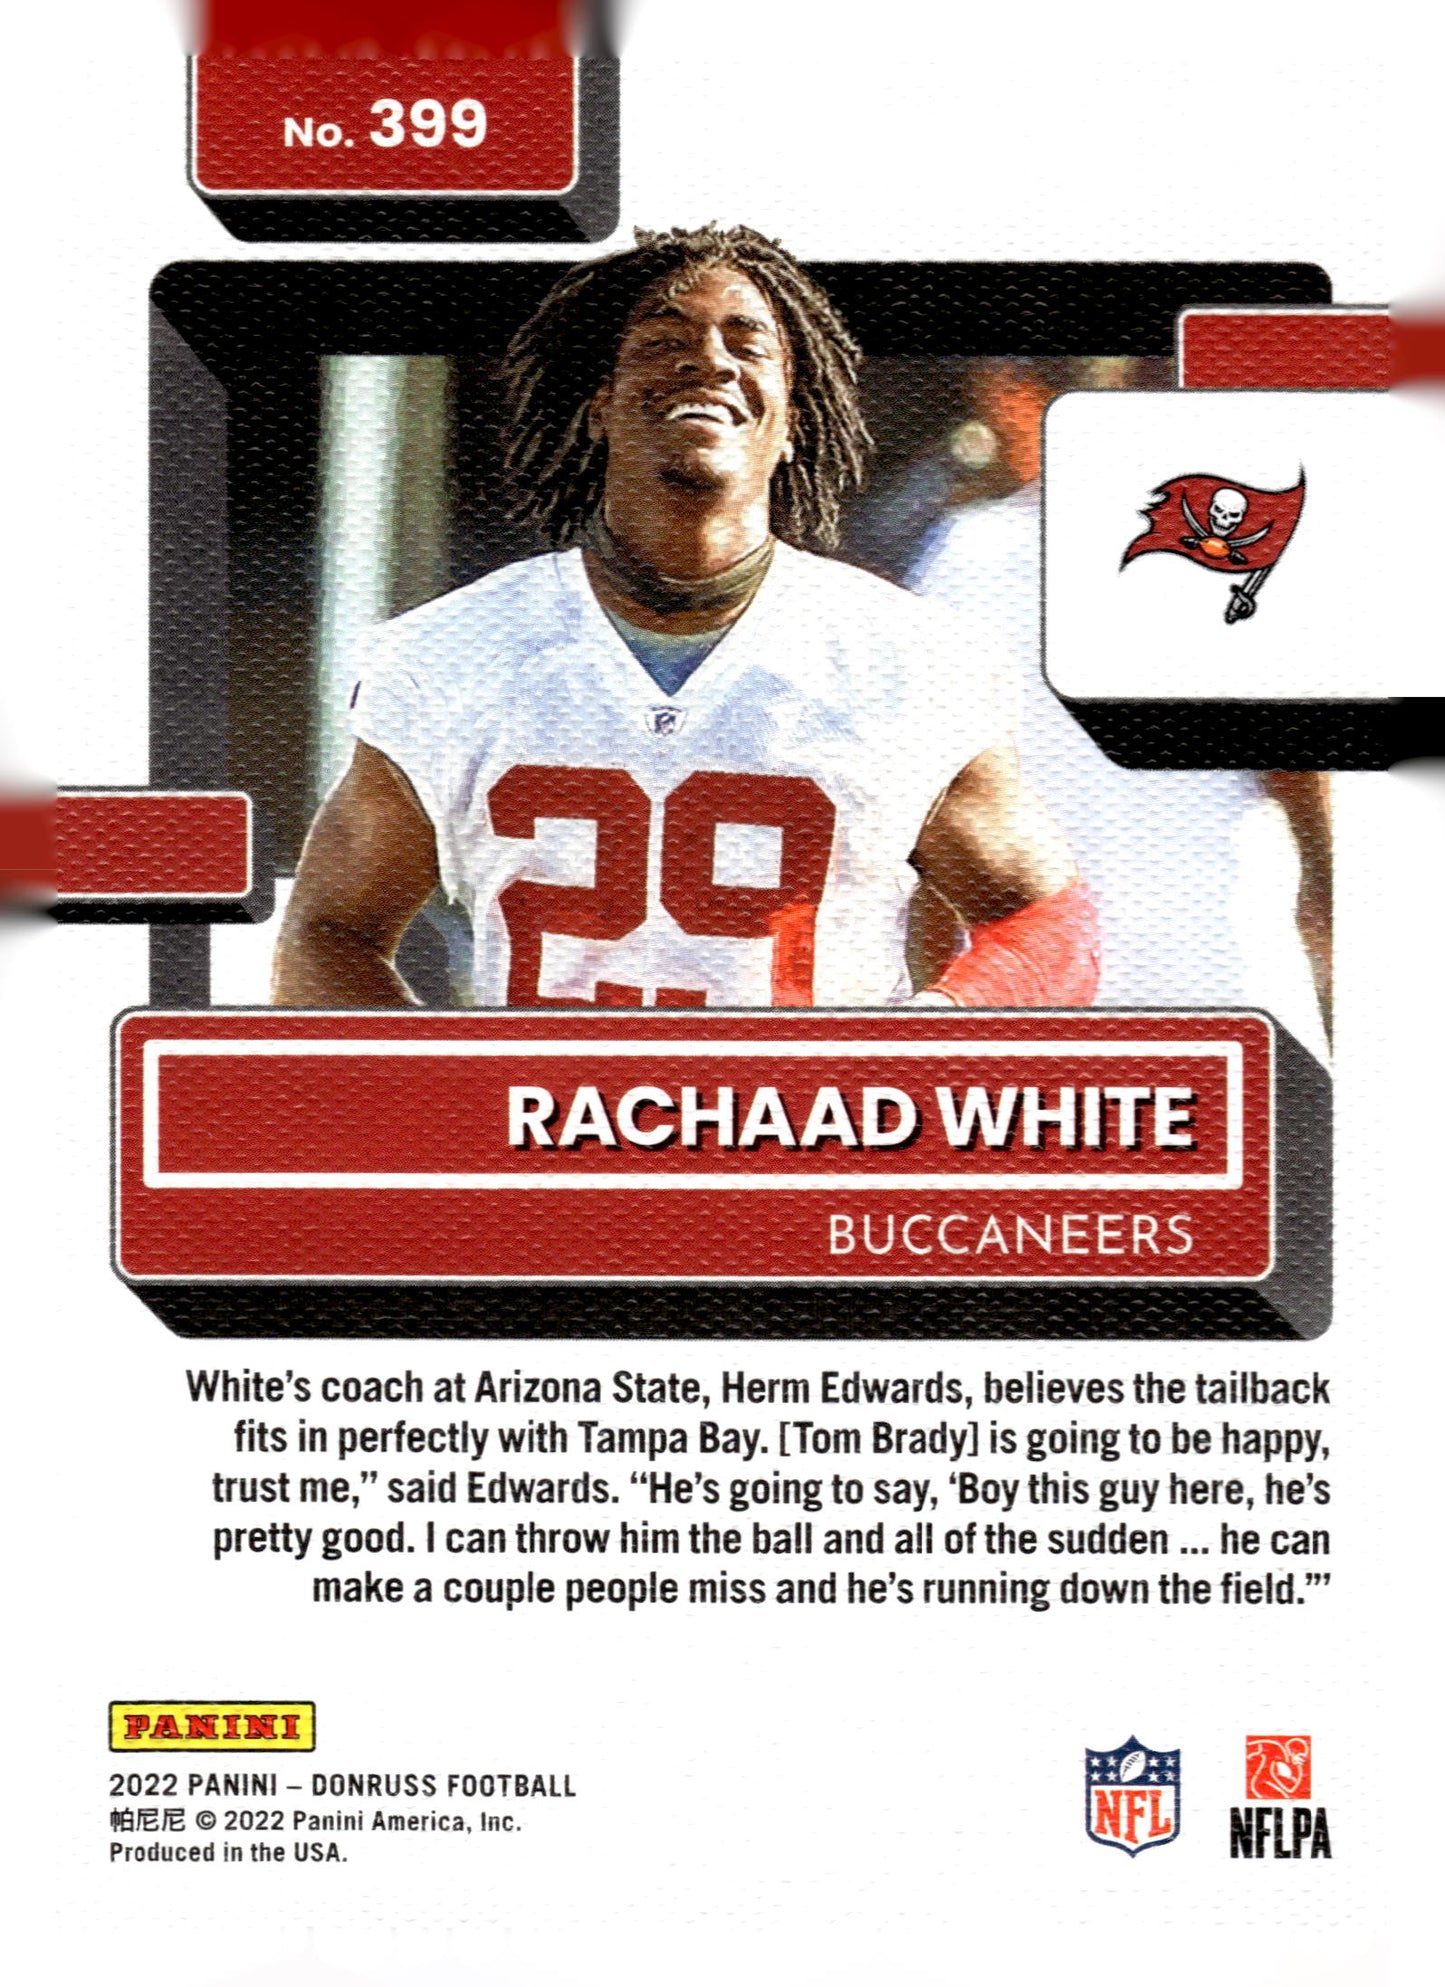 2022 Donruss #399 Rachaad White Rated Rookies Portrait